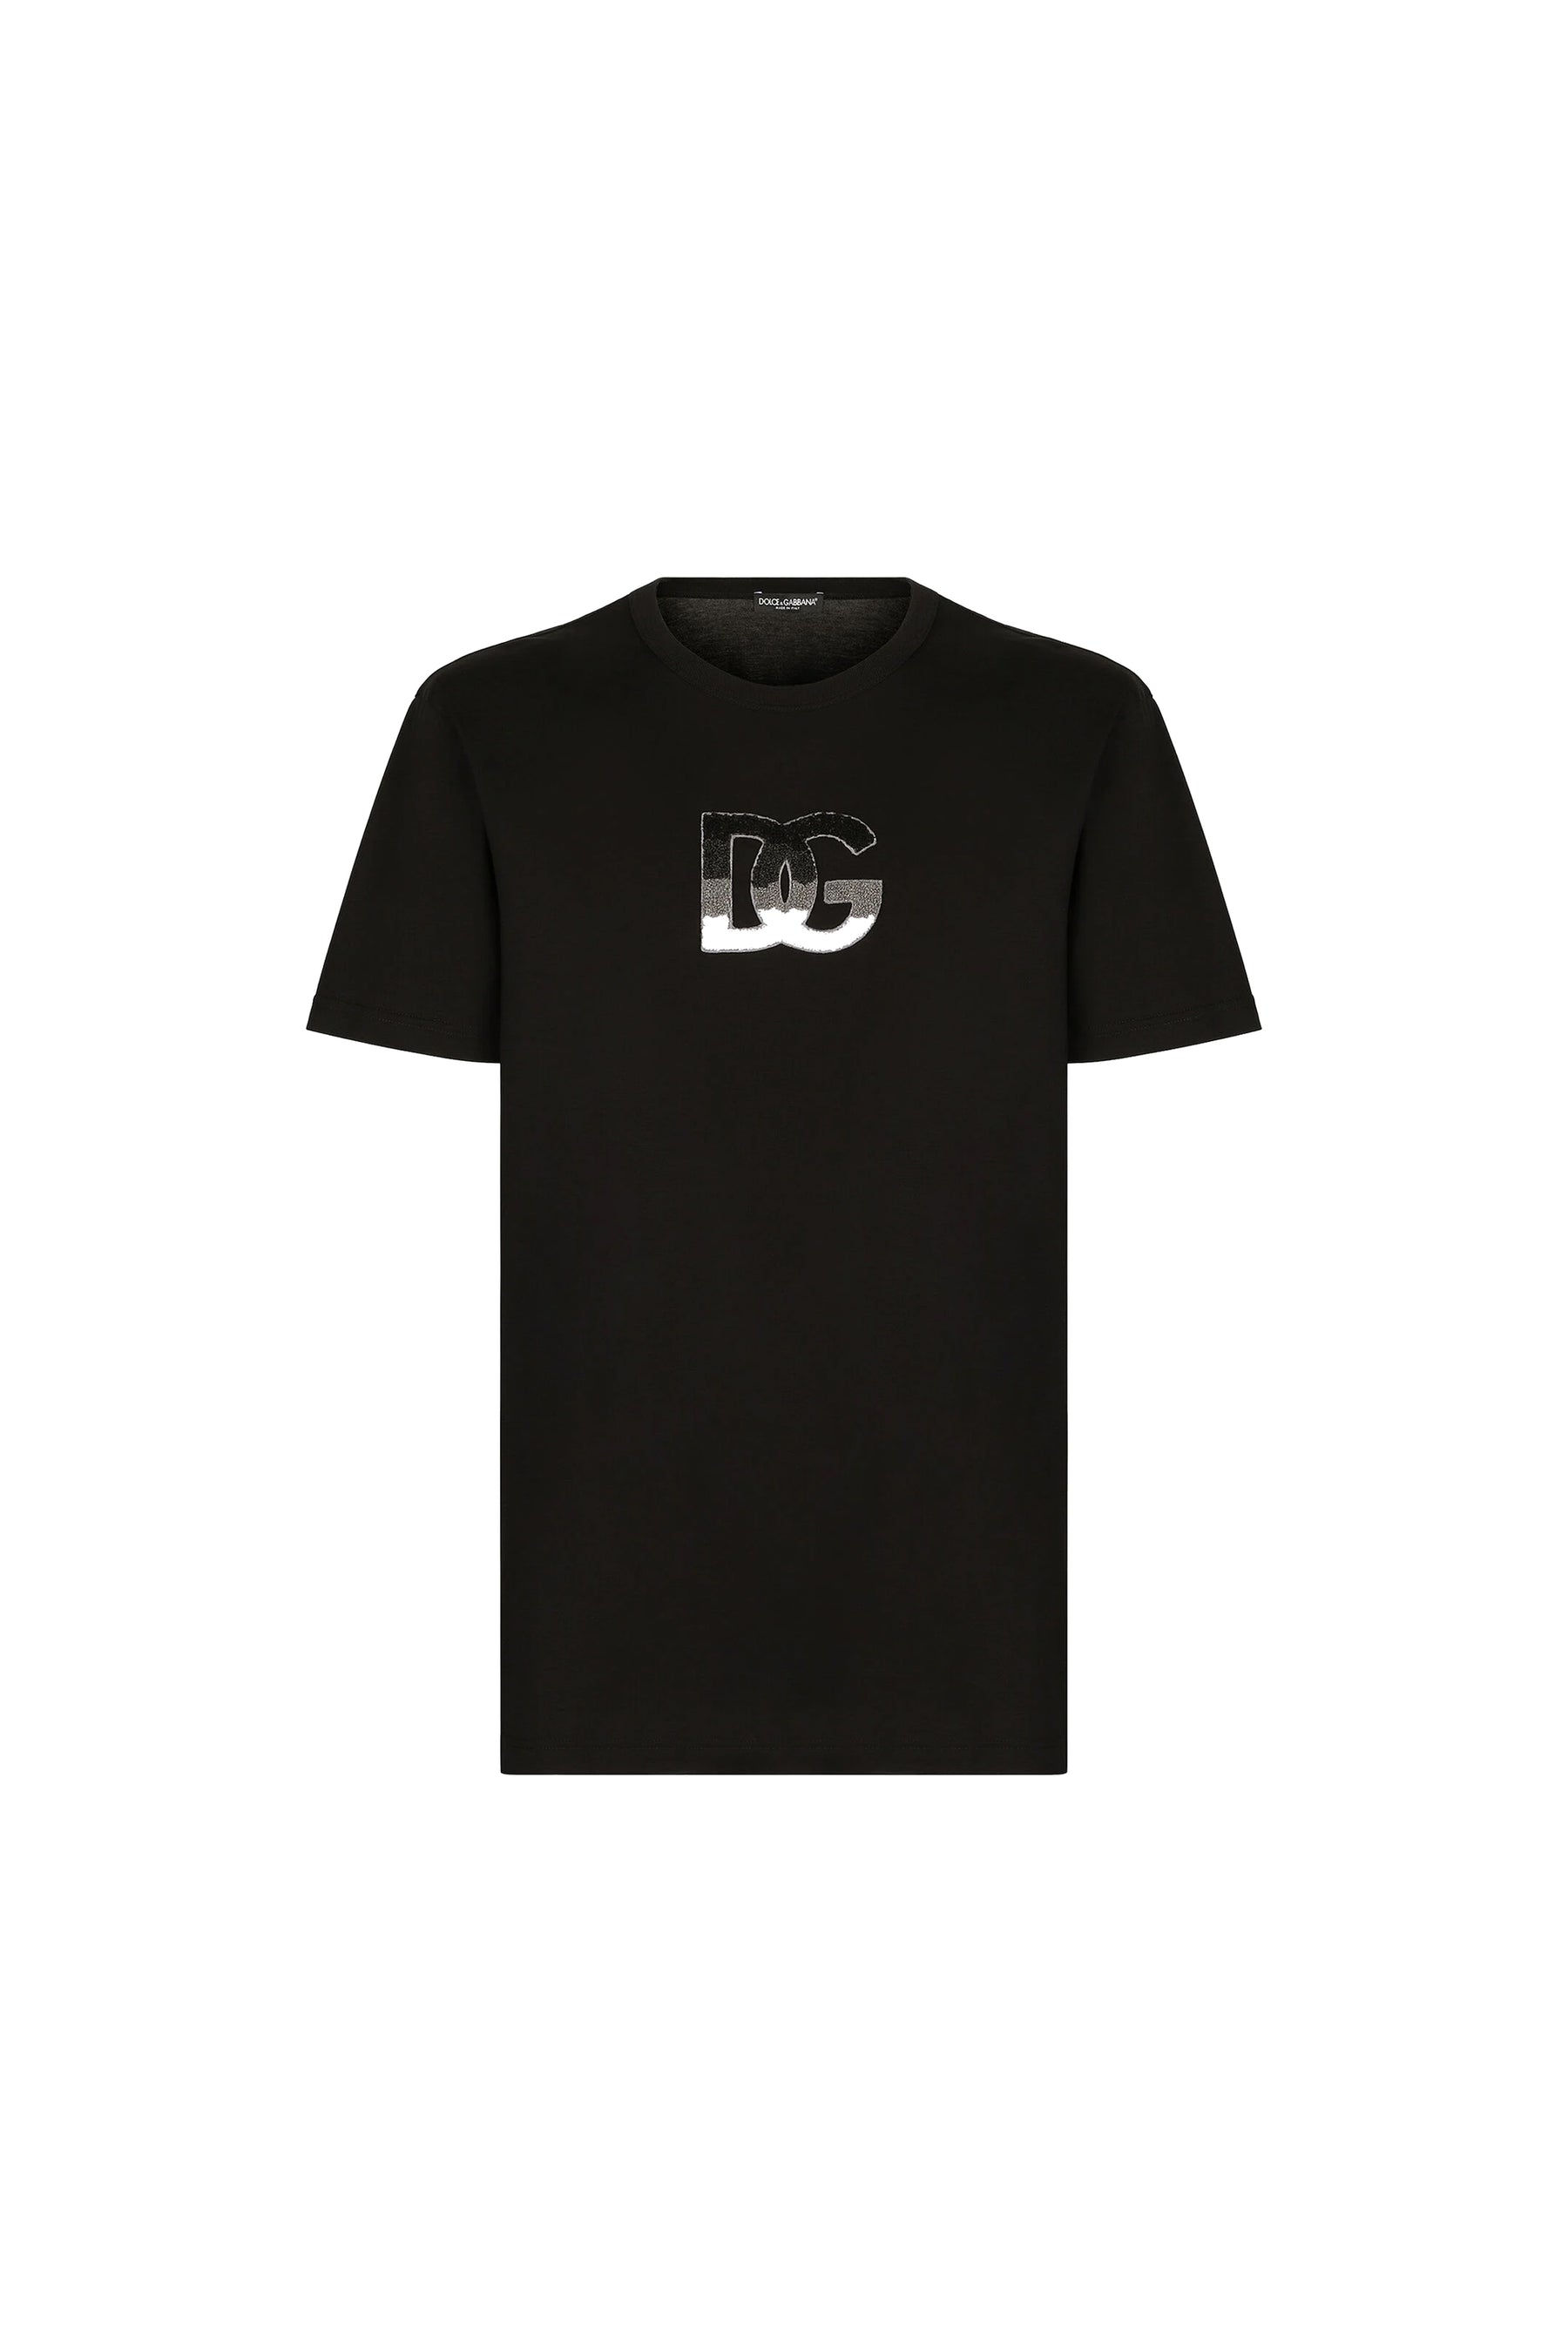 Dolce & Gabbana Cotton T-shirt with DG patch